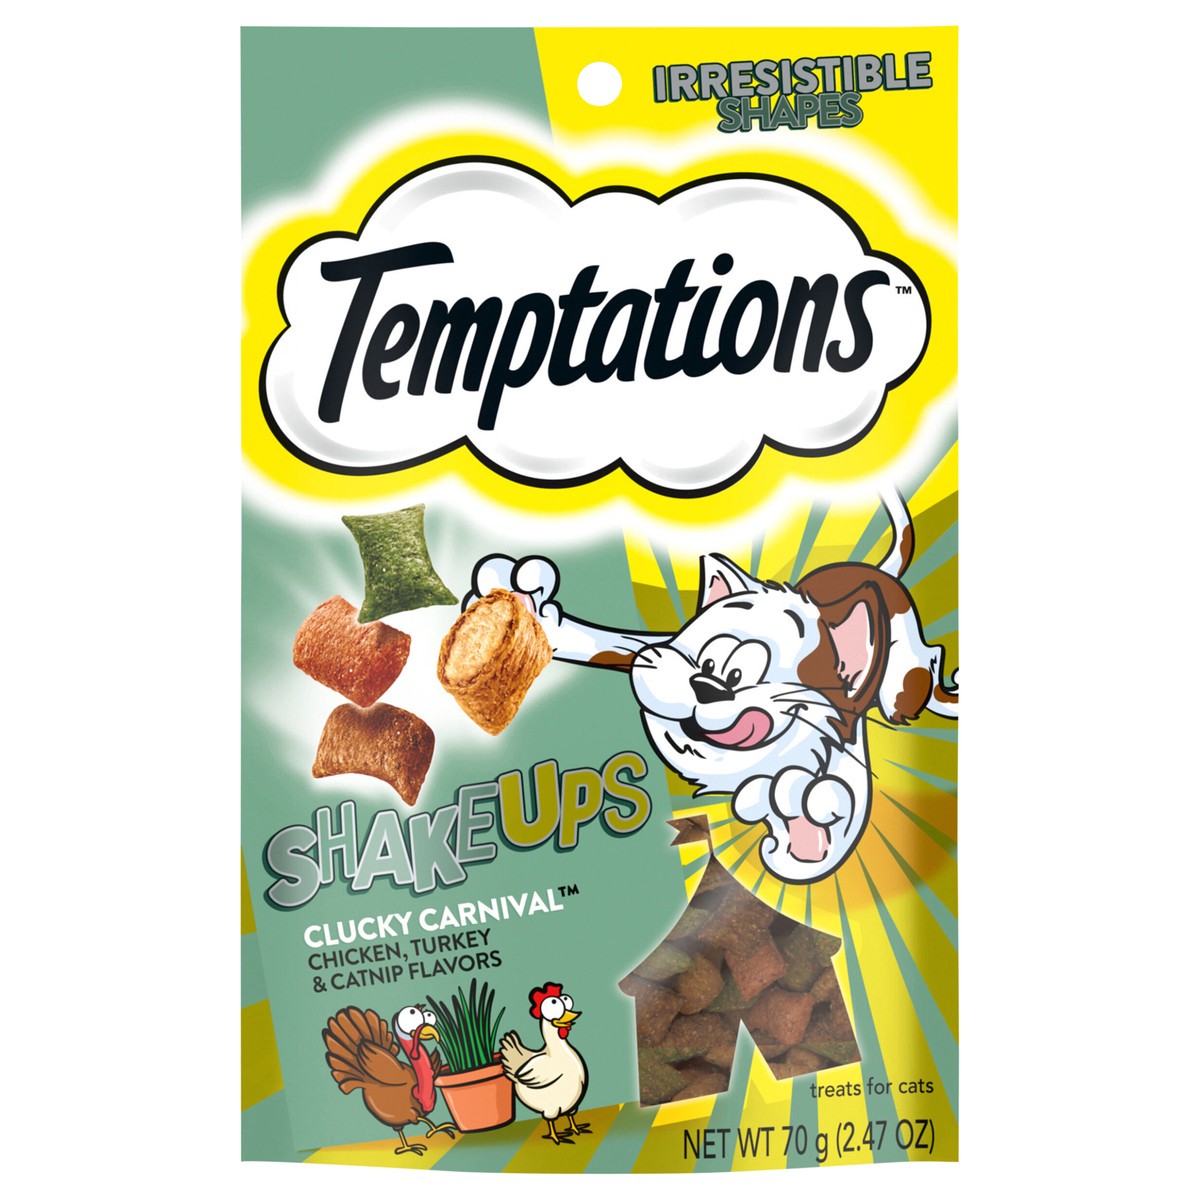 slide 1 of 3, Temptations ShakeUps Clucky Carnival Chicken, Turkey & Catnip Flavors Treats for Cats 2.47 oz, 2.47 oz